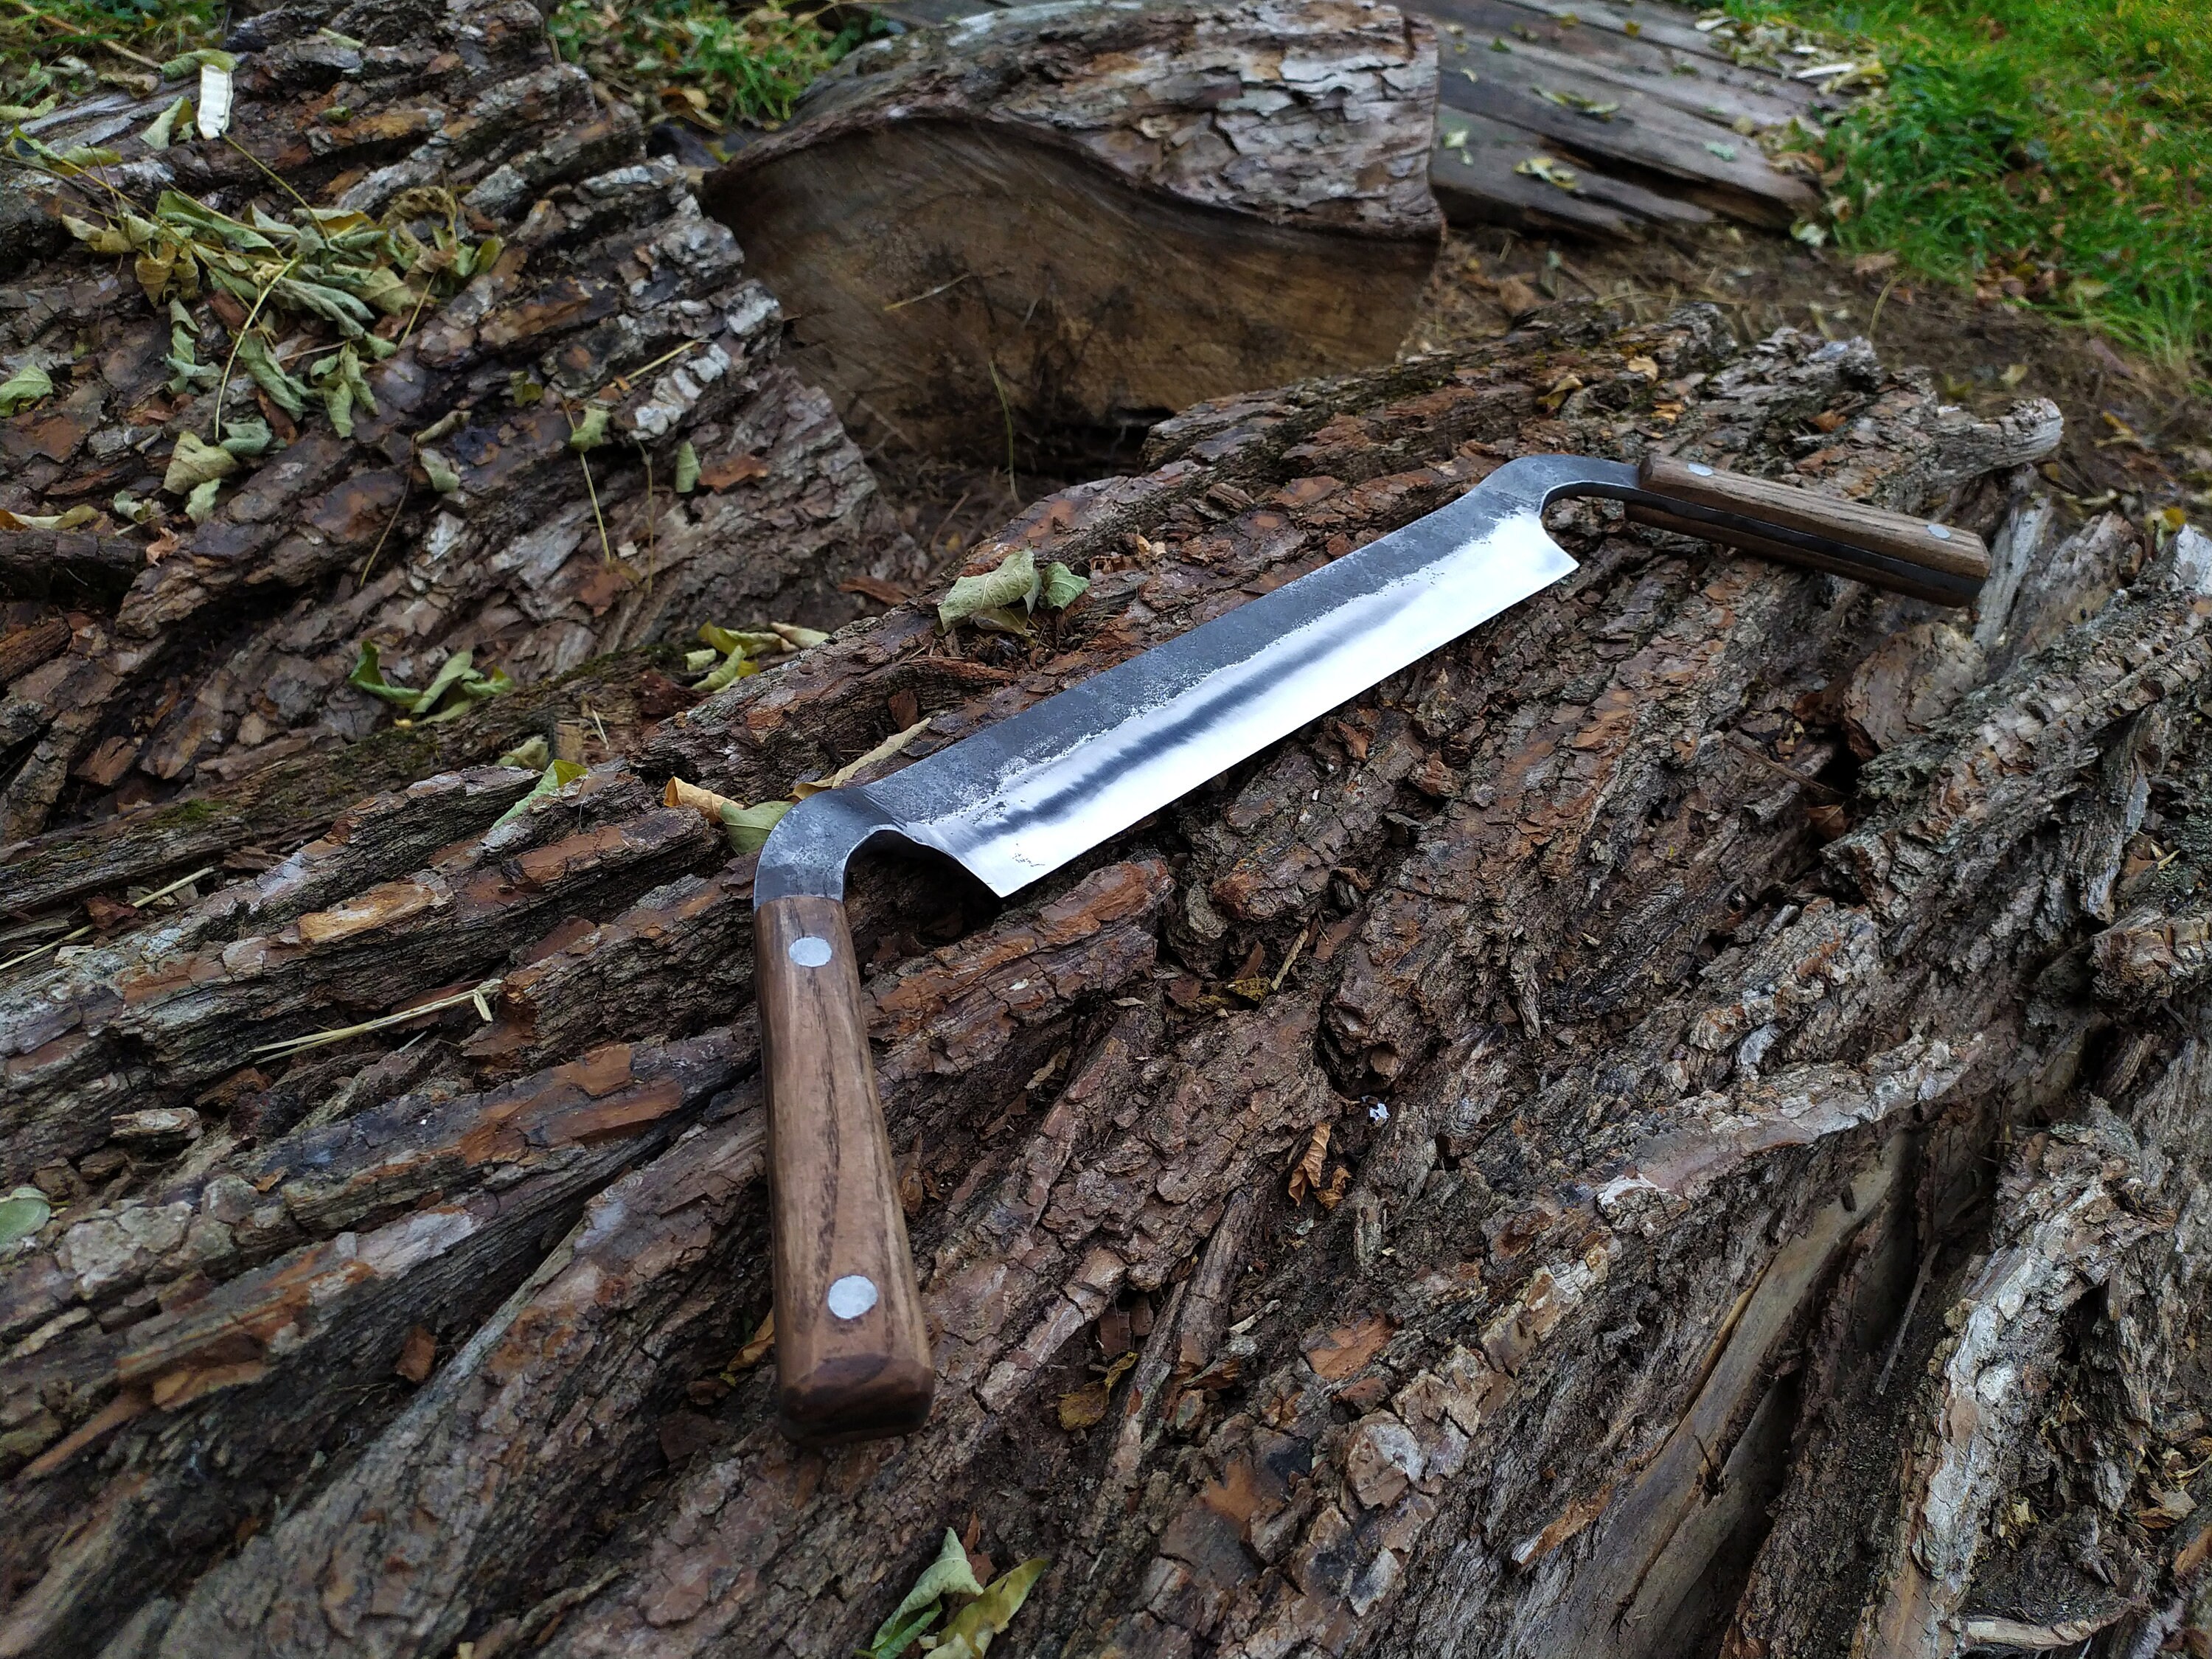 Semicircular drawknife, carpenter drawknife, forged drawknife - The Spoon  Crank